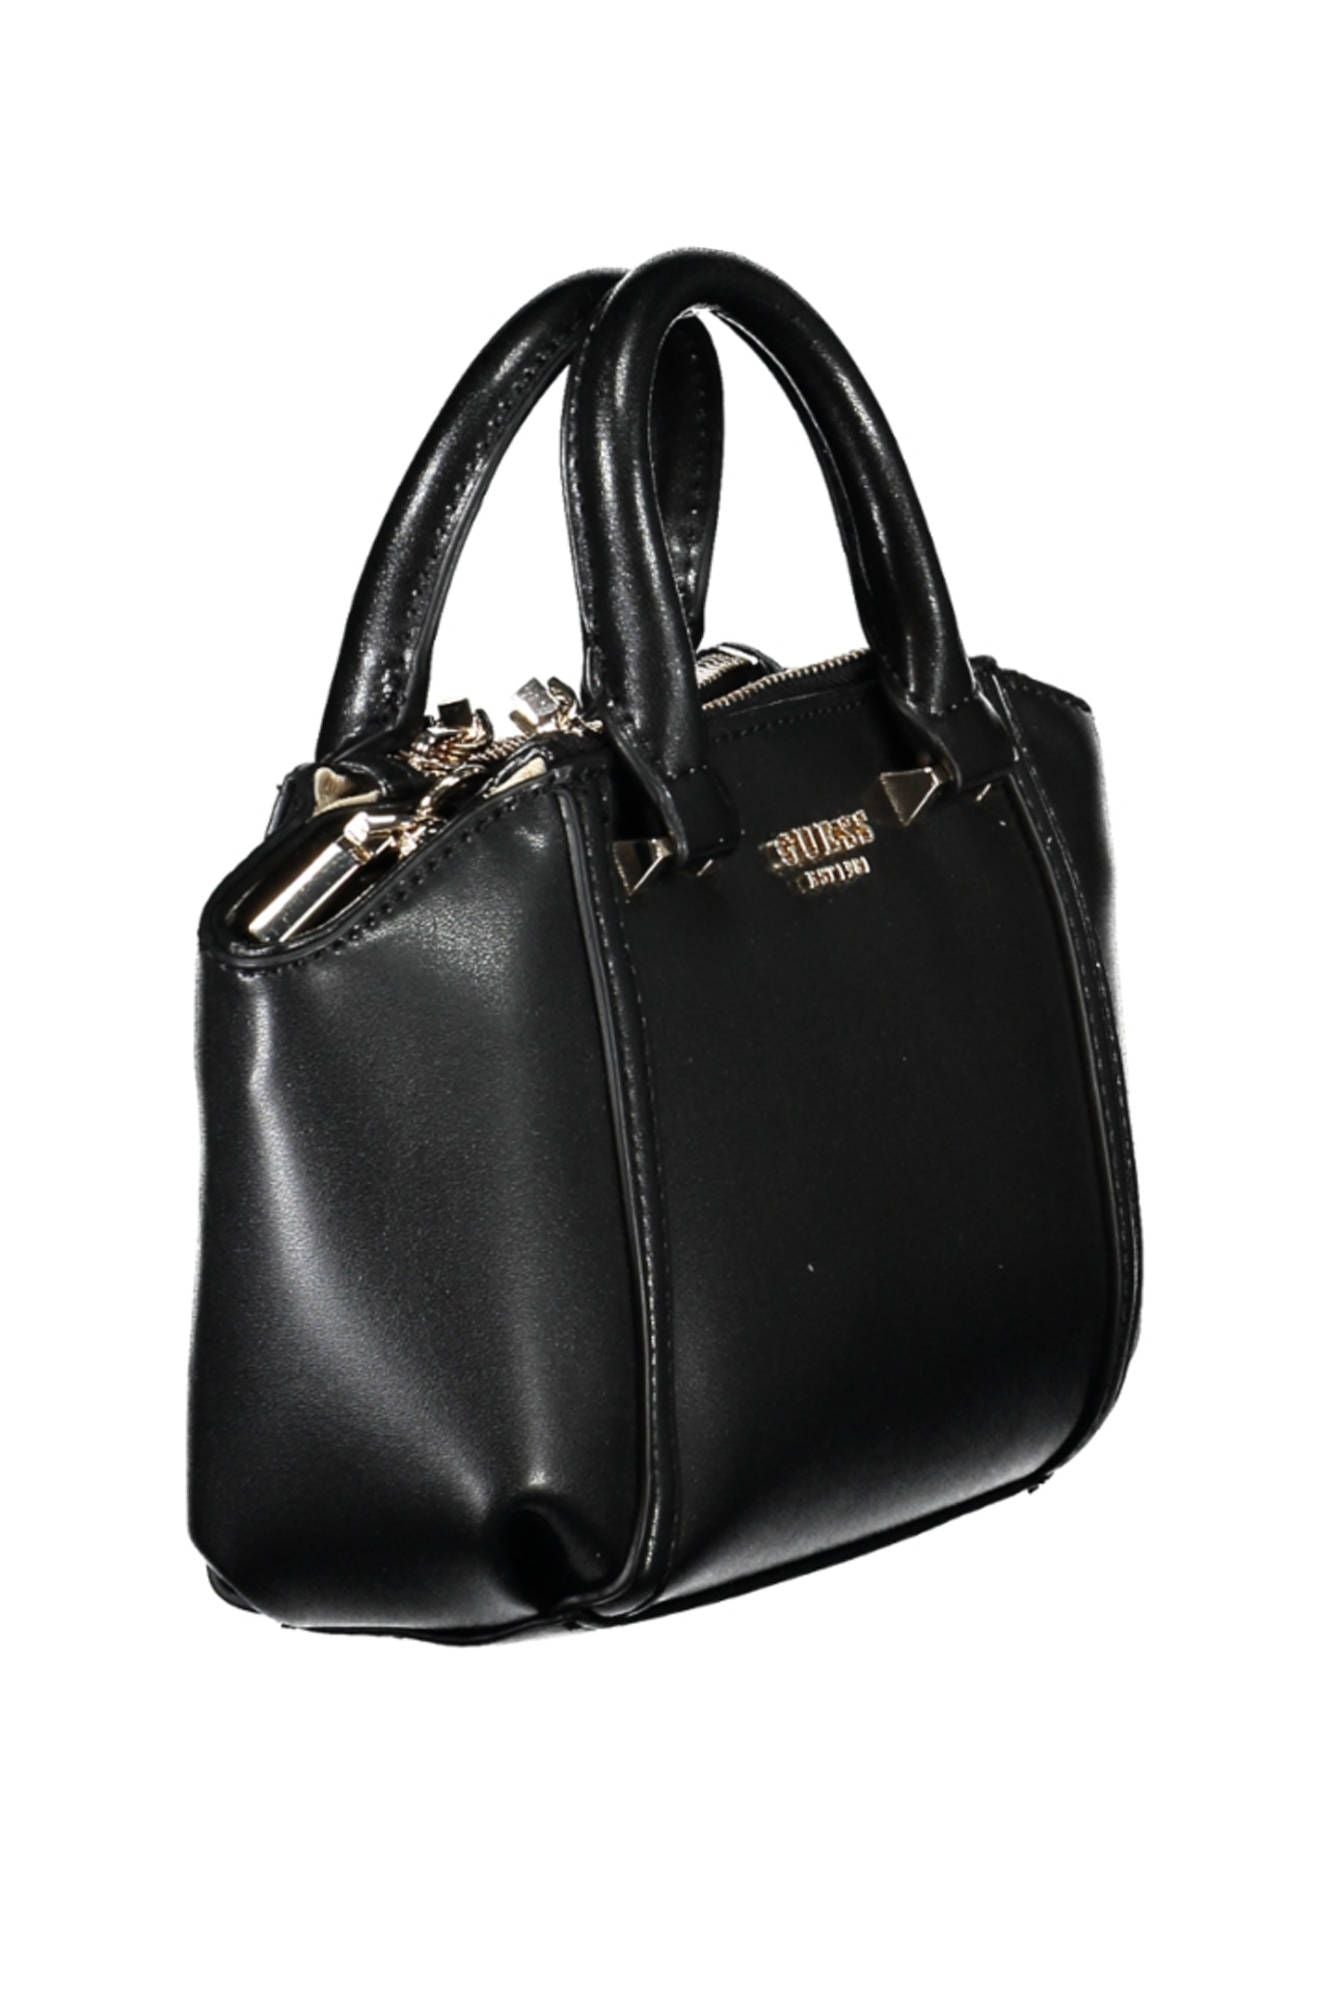 Chic Black Contrasting Detail Tote Bag